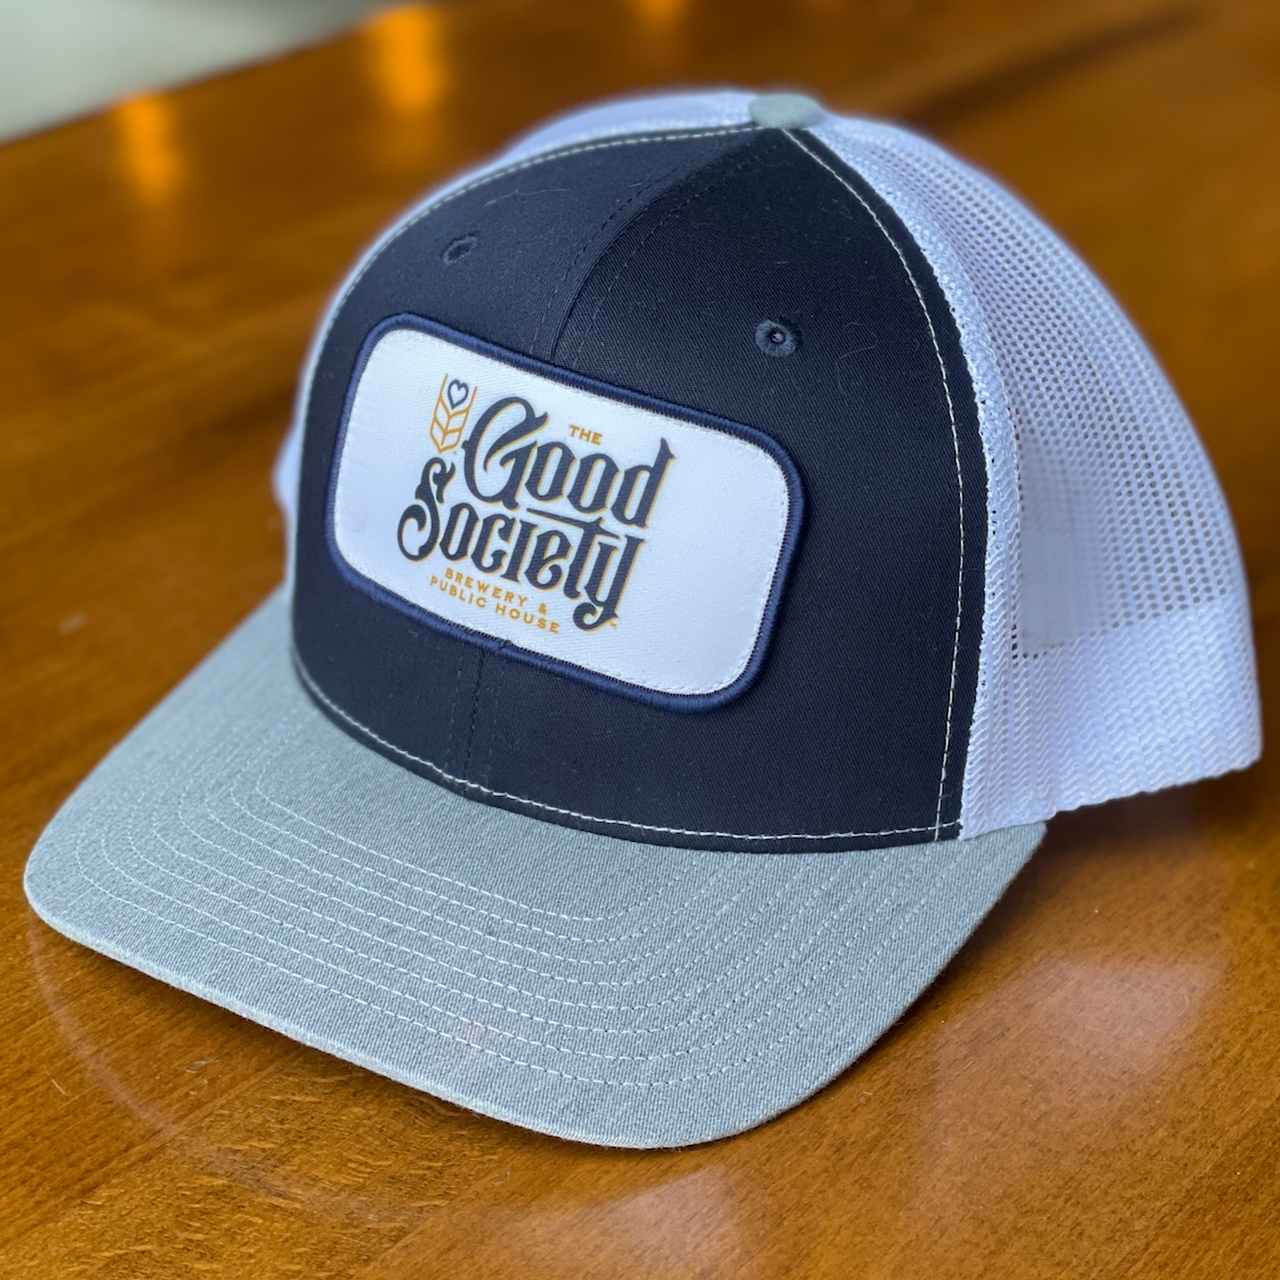 Navy, White, & Grey Hat w/ The Good Society Patch